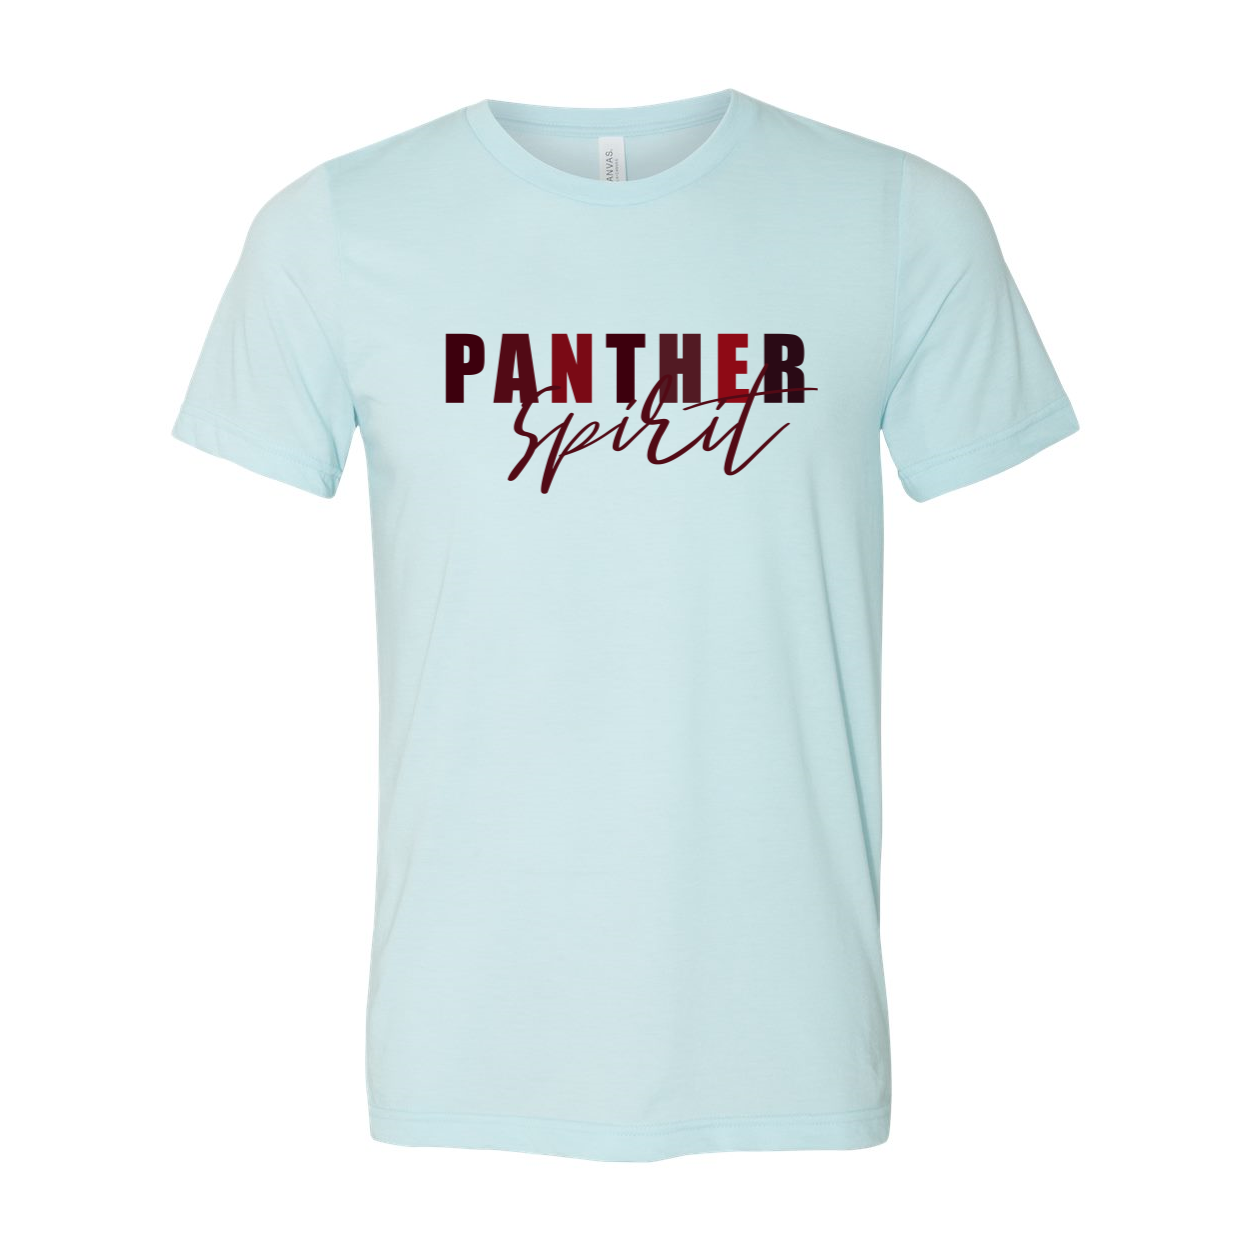 Panthers Spirit Monochrome Soft Tee